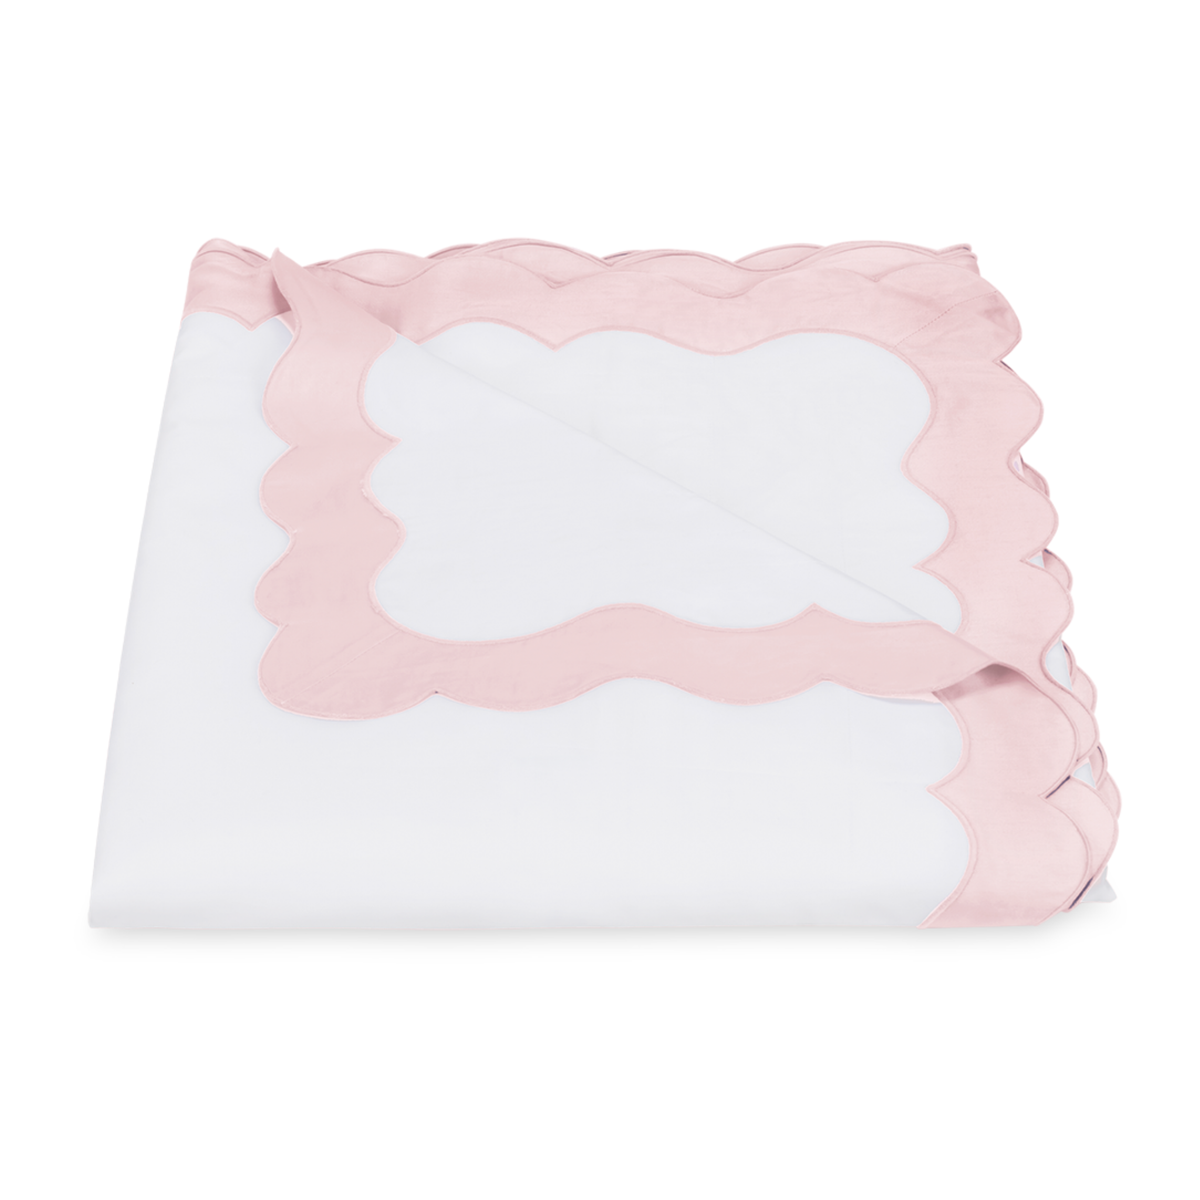 Folded Duvet Cover of Matouk Lorelei Bedding in Pink Color